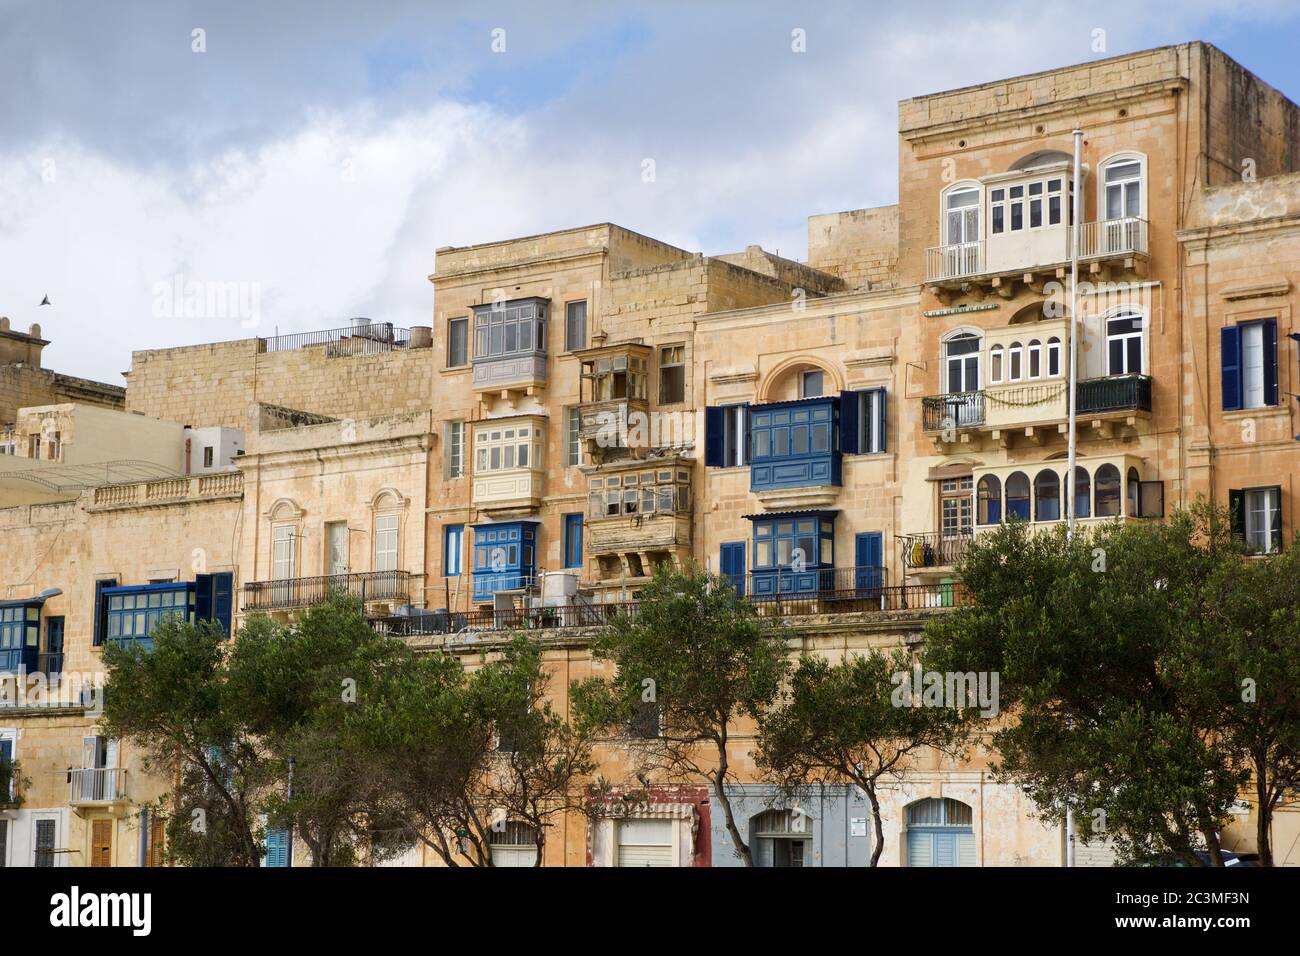 VALLETTA, MALTA - DEC 31st, 2019 Typical Maltese buildings with gallarija, traditional enclosed wooden balconies Stock Photo